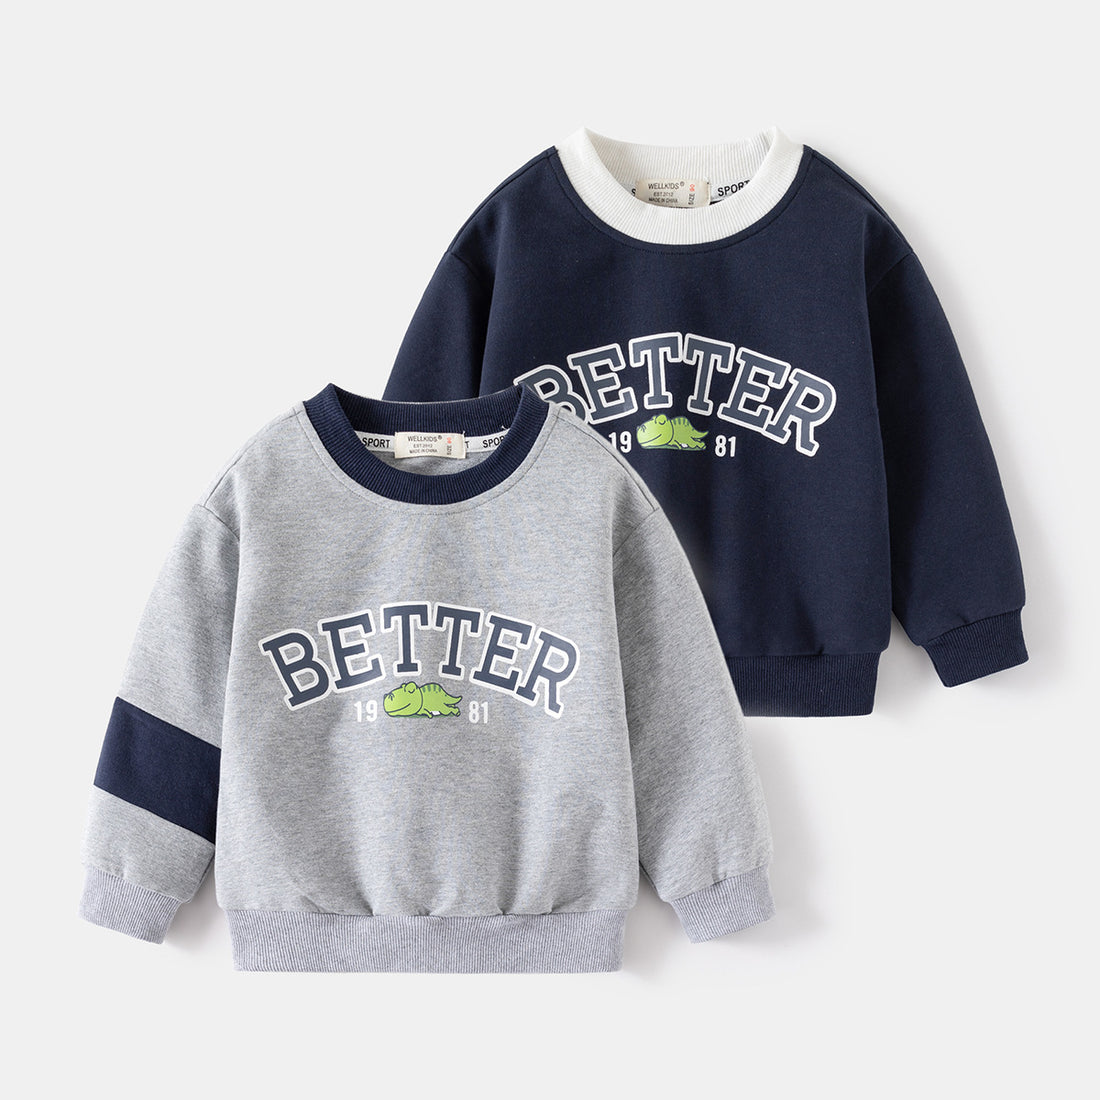 [5131079] - Baju Atasan Sweater Hypebeast Fashion Import Anak Laki-Laki - Motif Crocodile Better